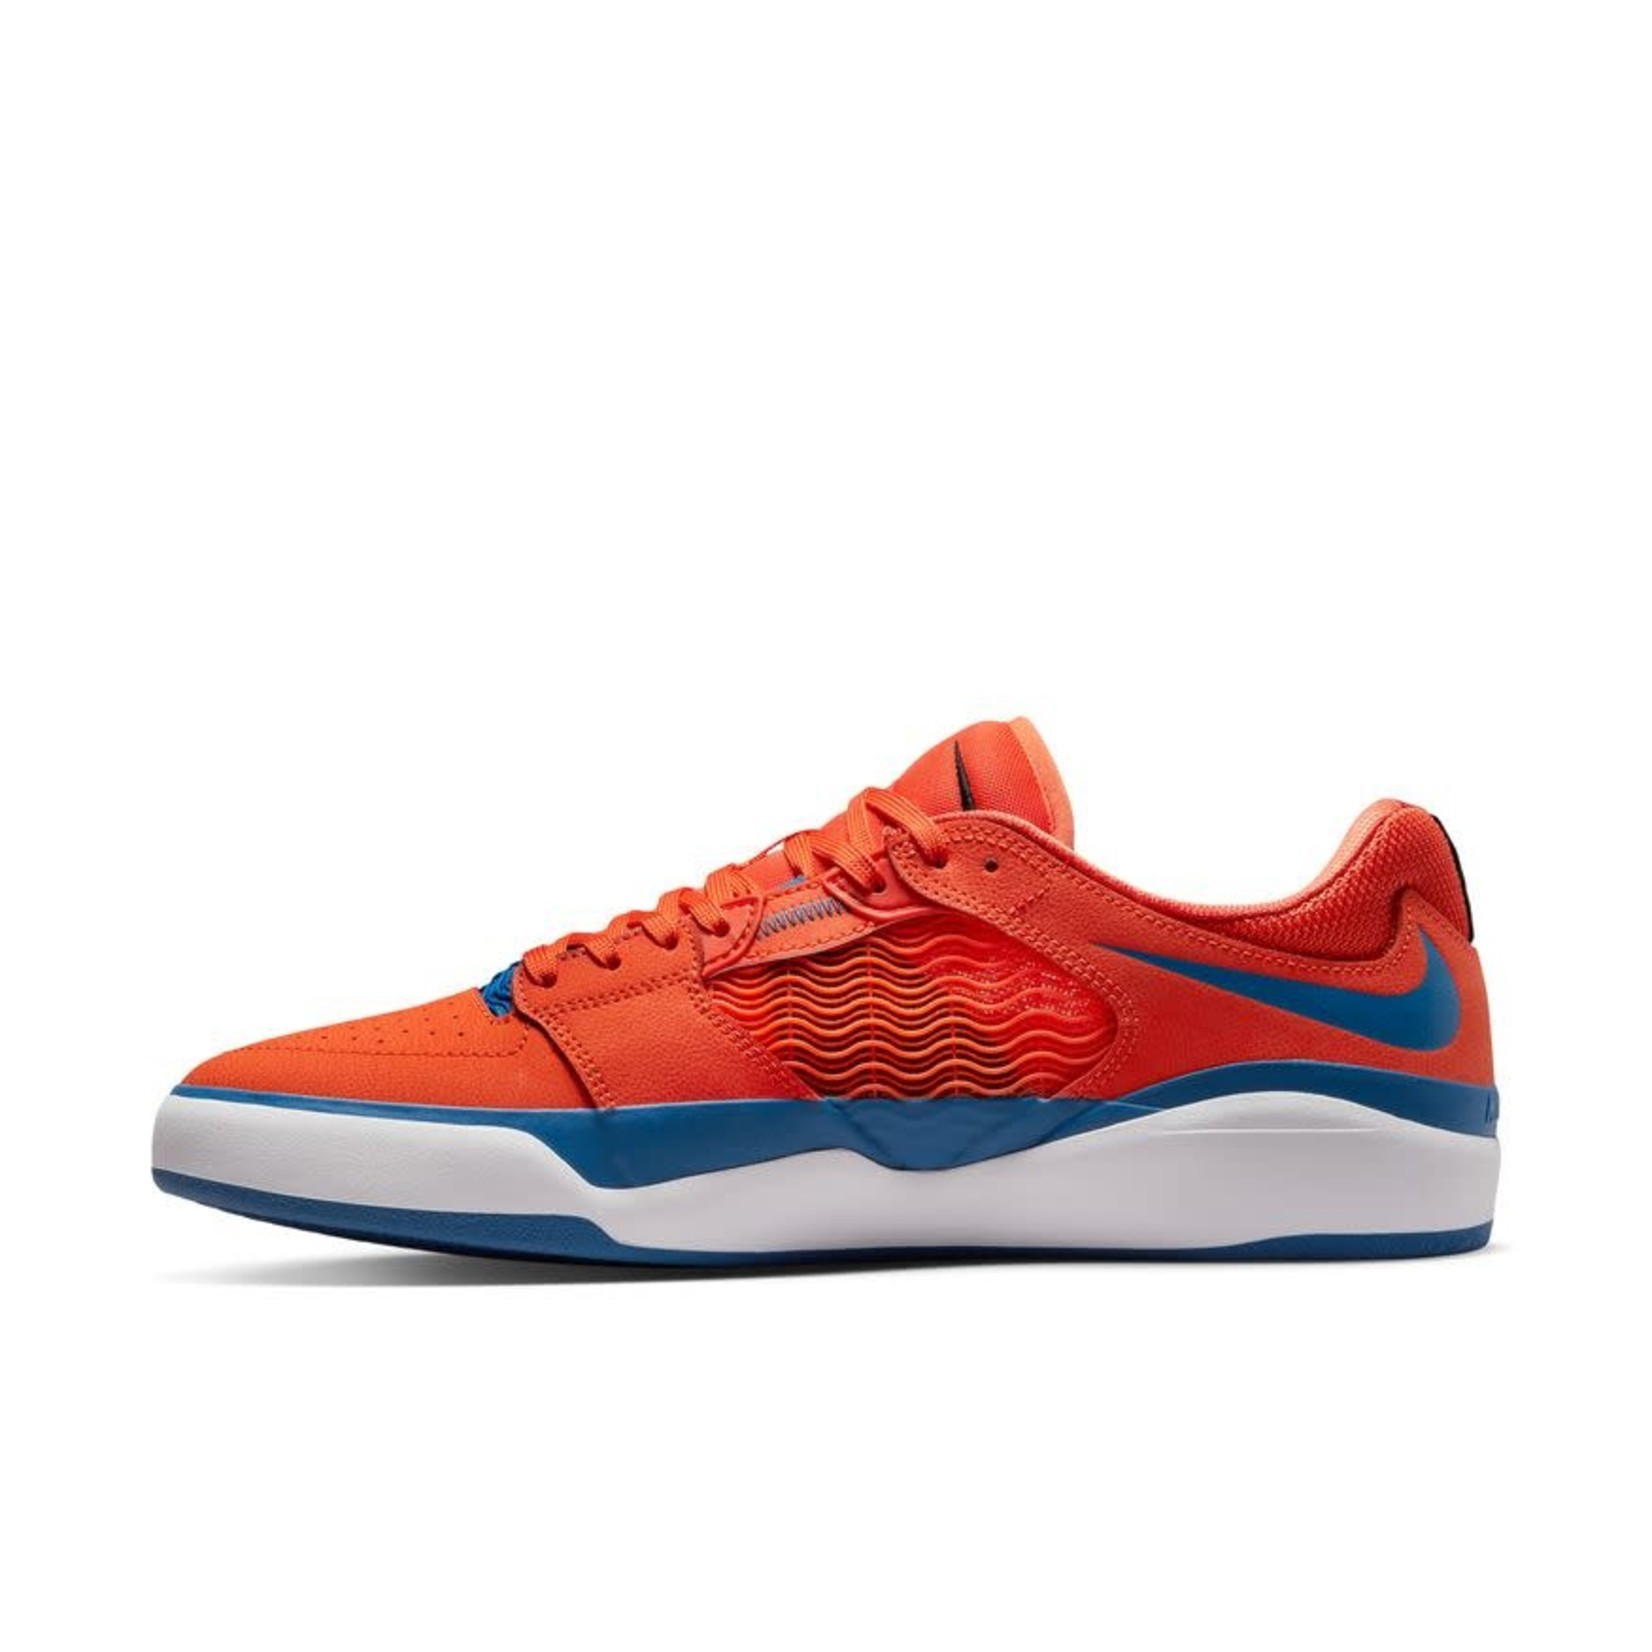 Nike SB Nike SB Ishod Wair Premium Orange/Blue Jay